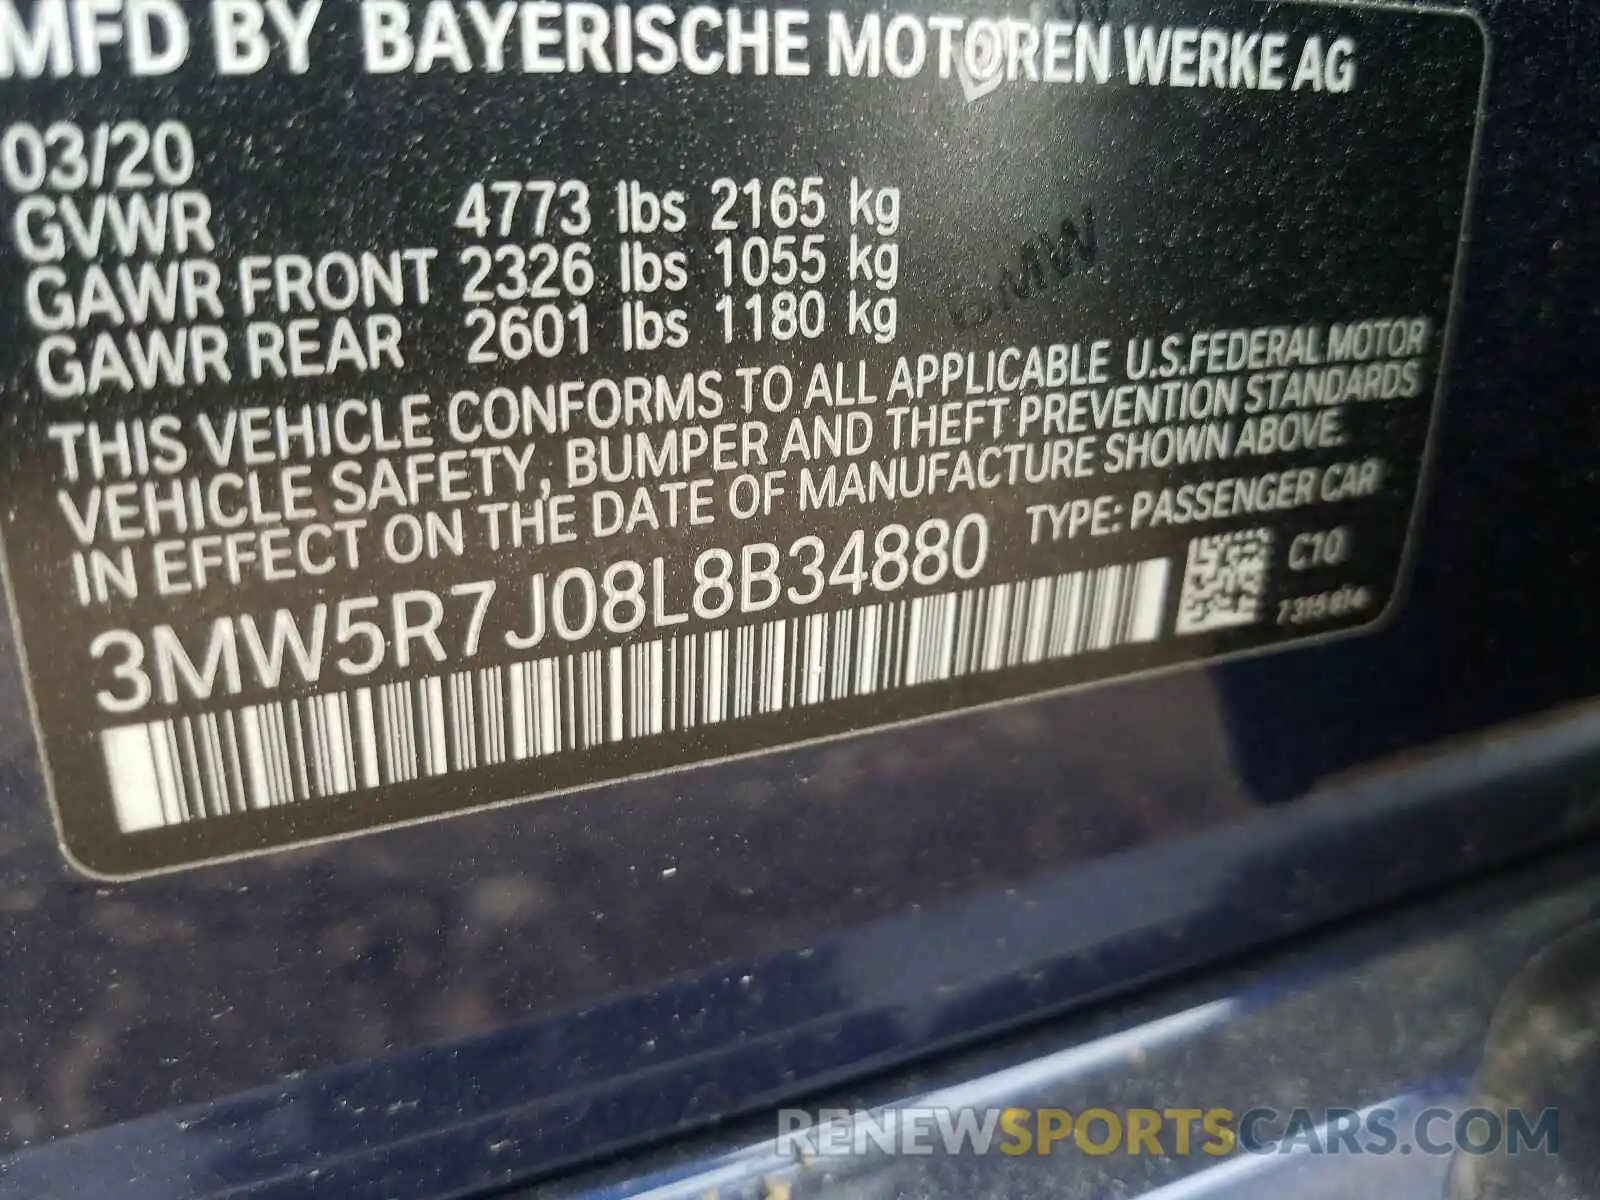 10 Photograph of a damaged car 3MW5R7J08L8B34880 BMW 3 SERIES 2020